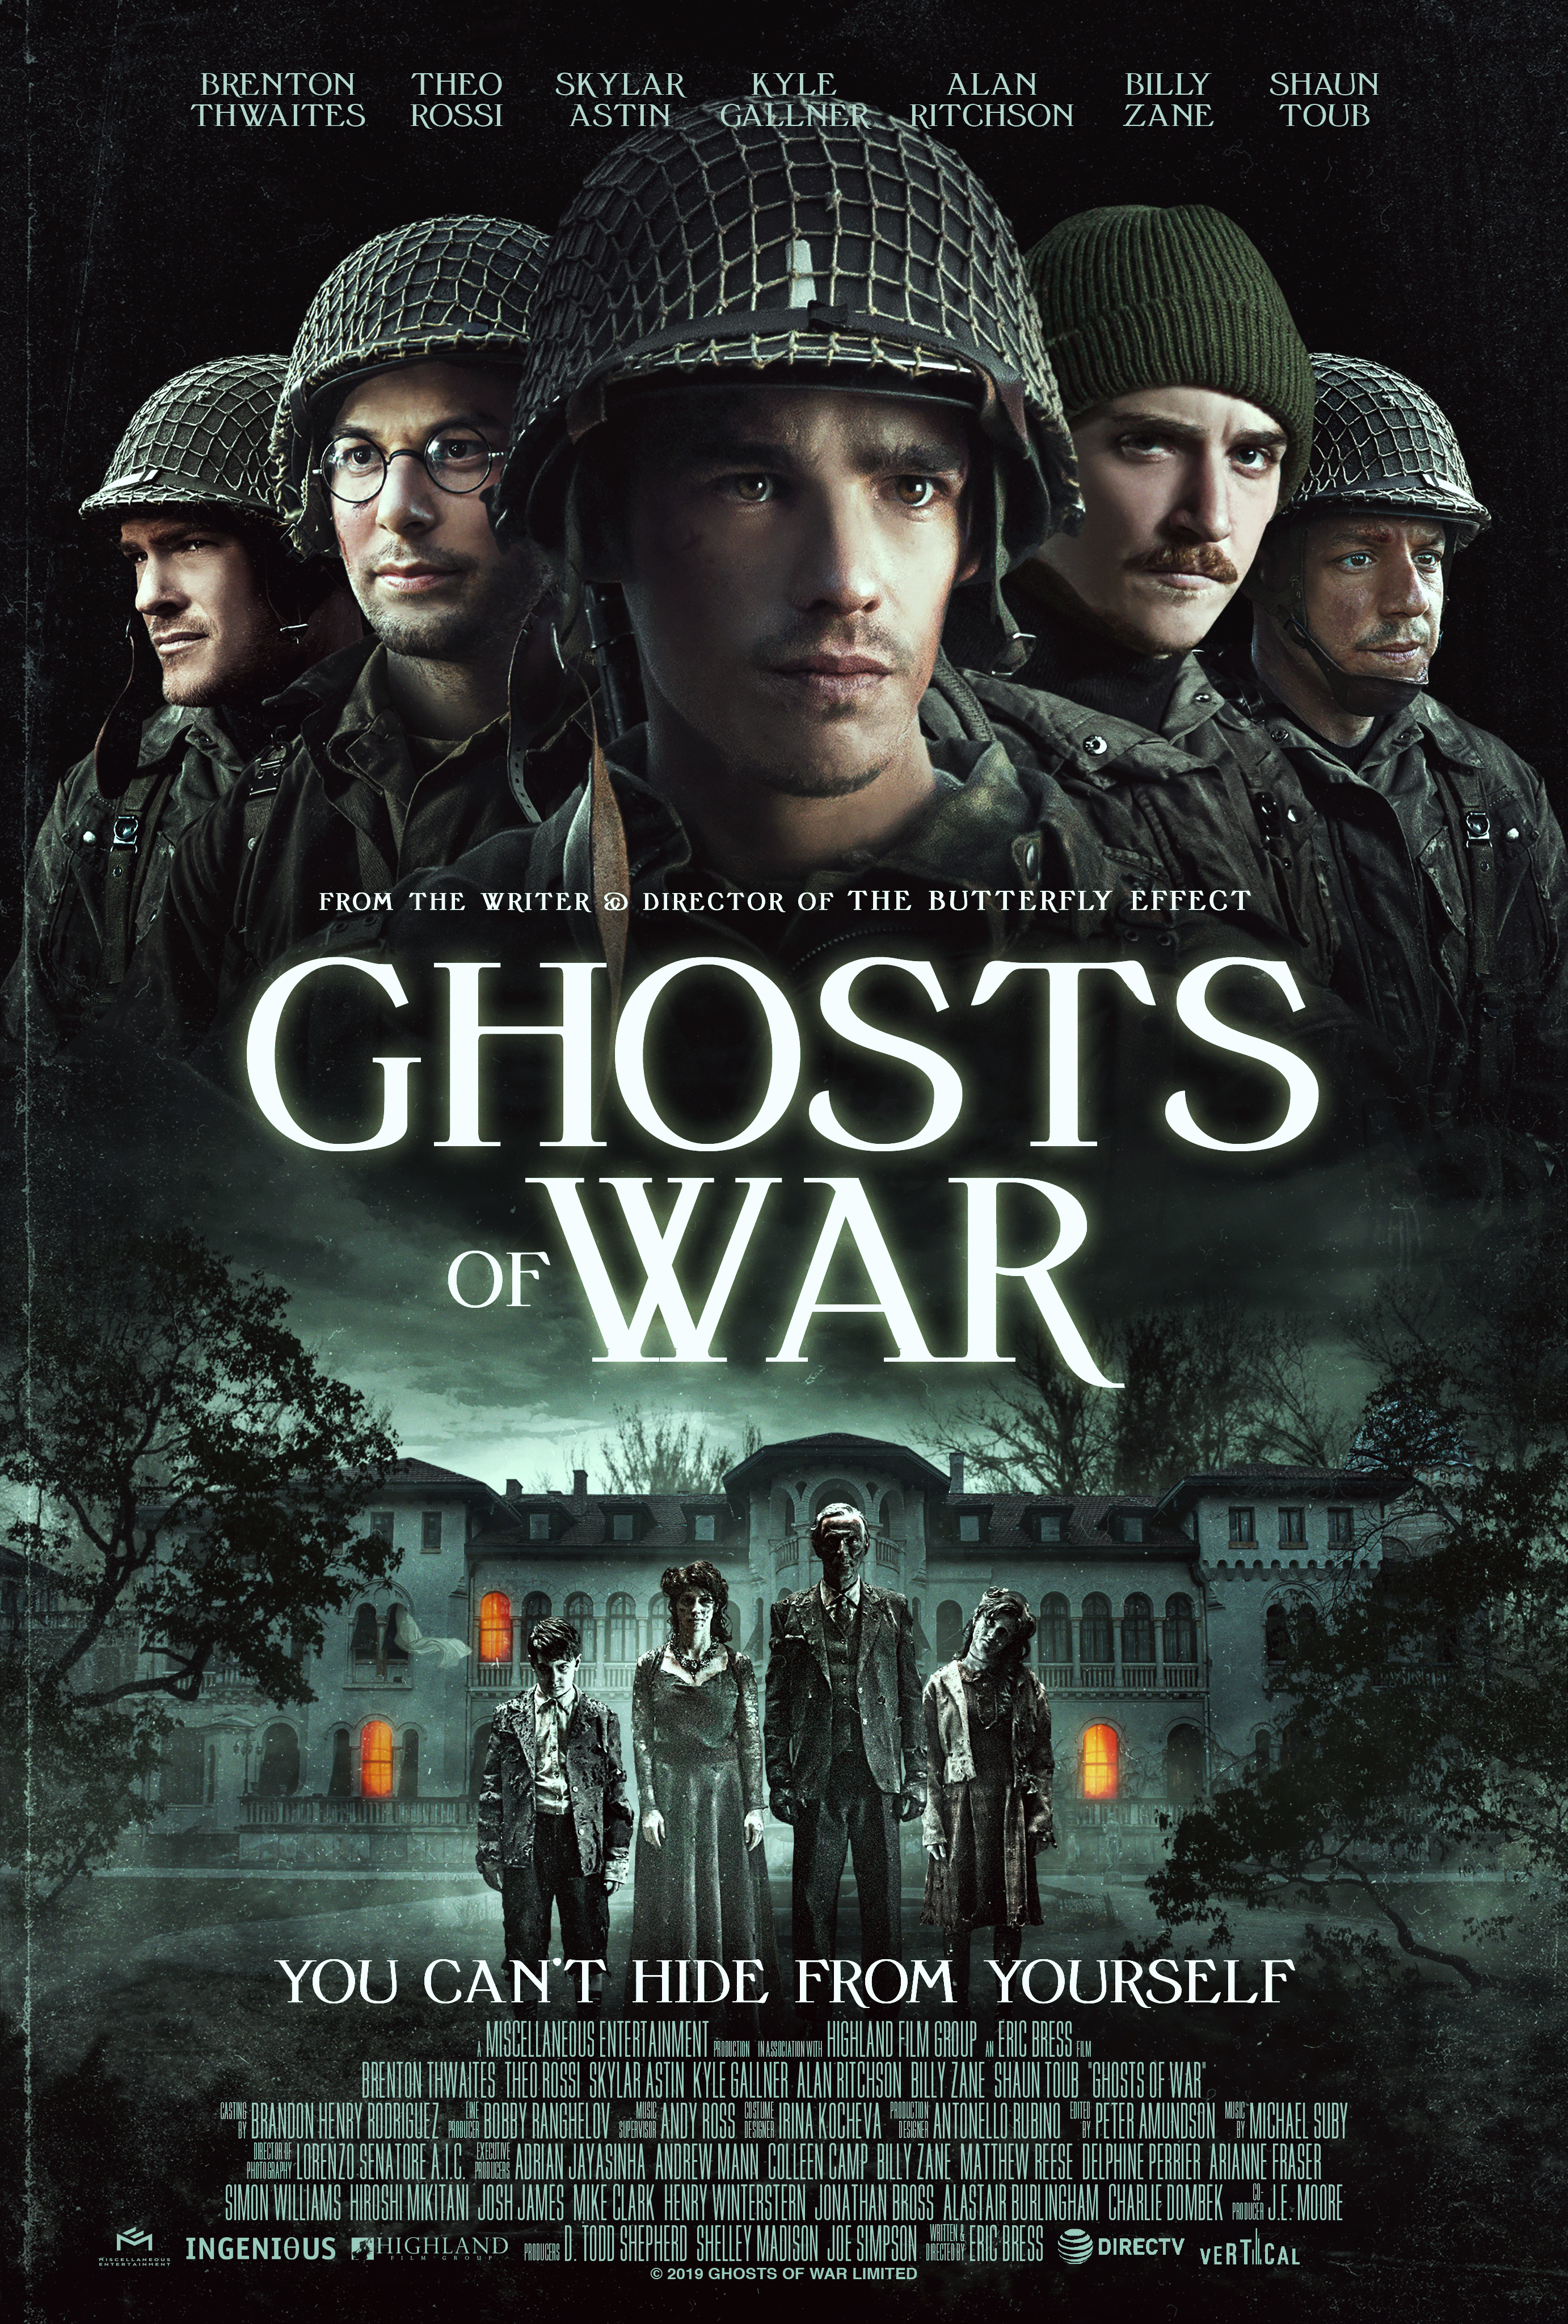 Nonton film Ghosts of War layarkaca21 indoxx1 ganool online streaming terbaru